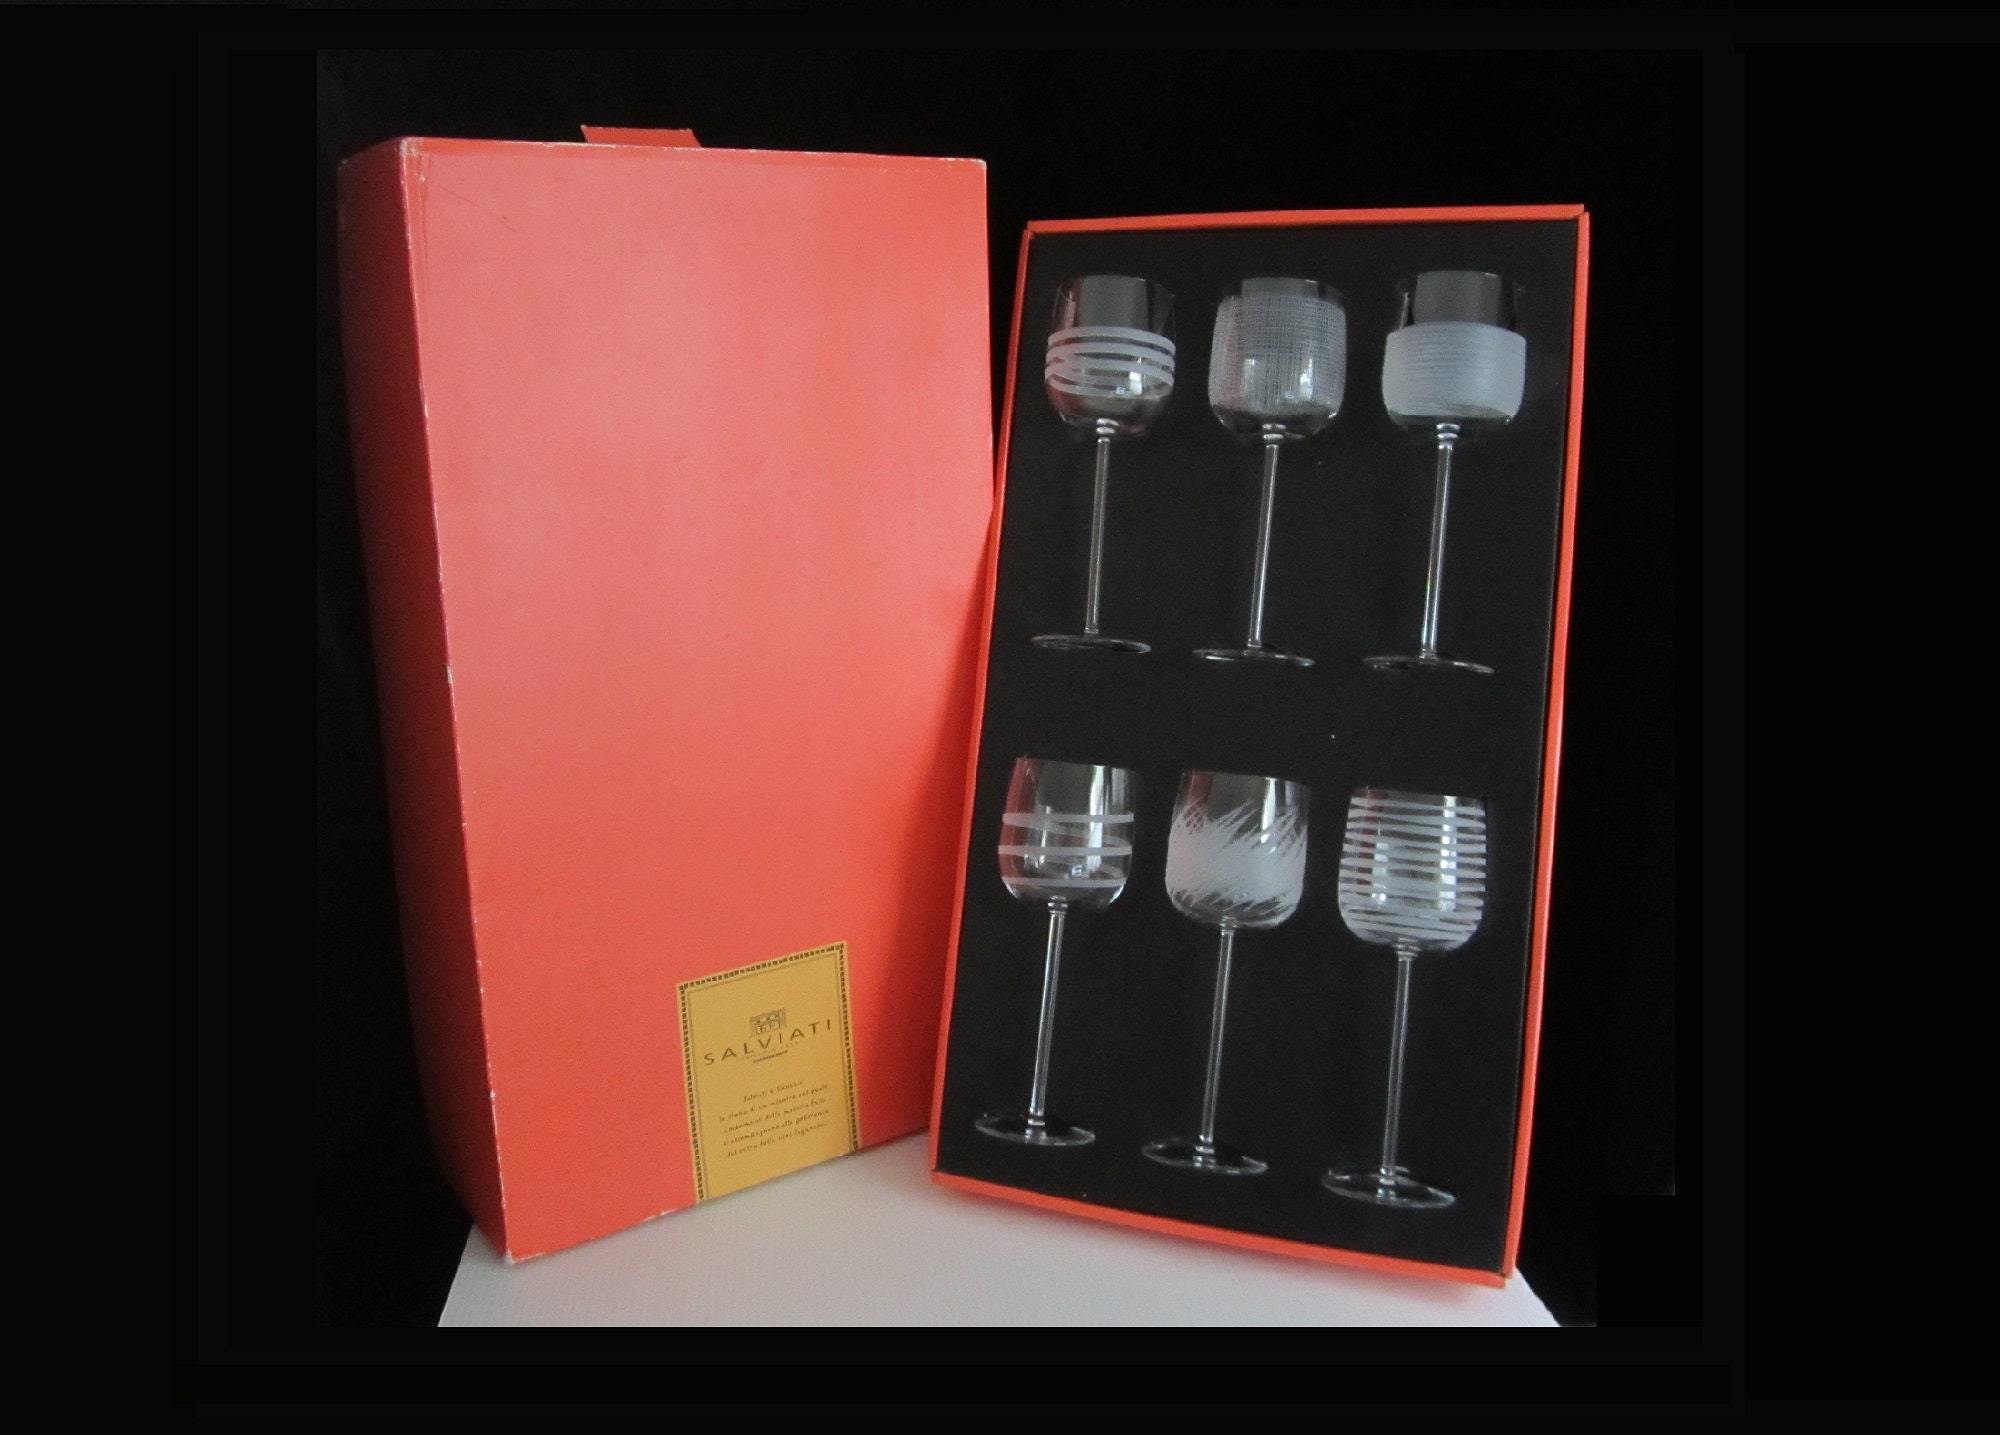 Nove Set of 6 Tall Drinking Glasses Salviati